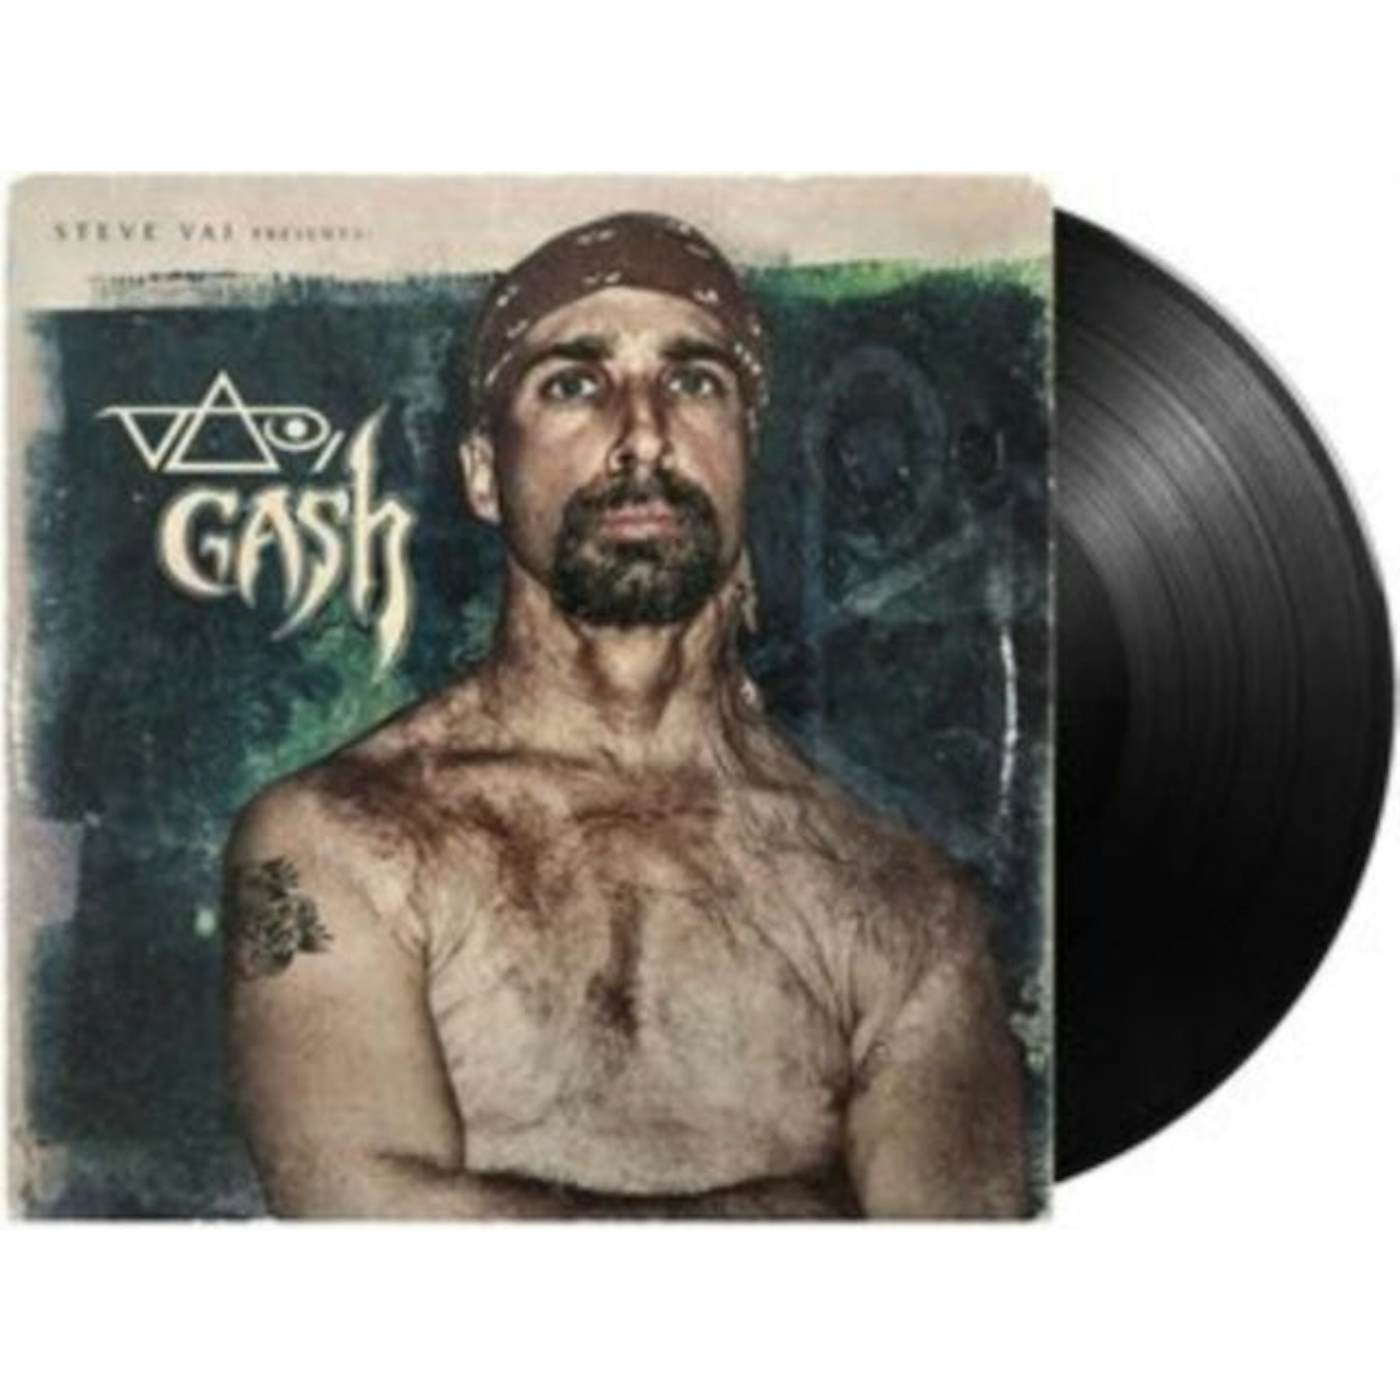 Steve Vai LP - Vai / Gash (Vinyl)